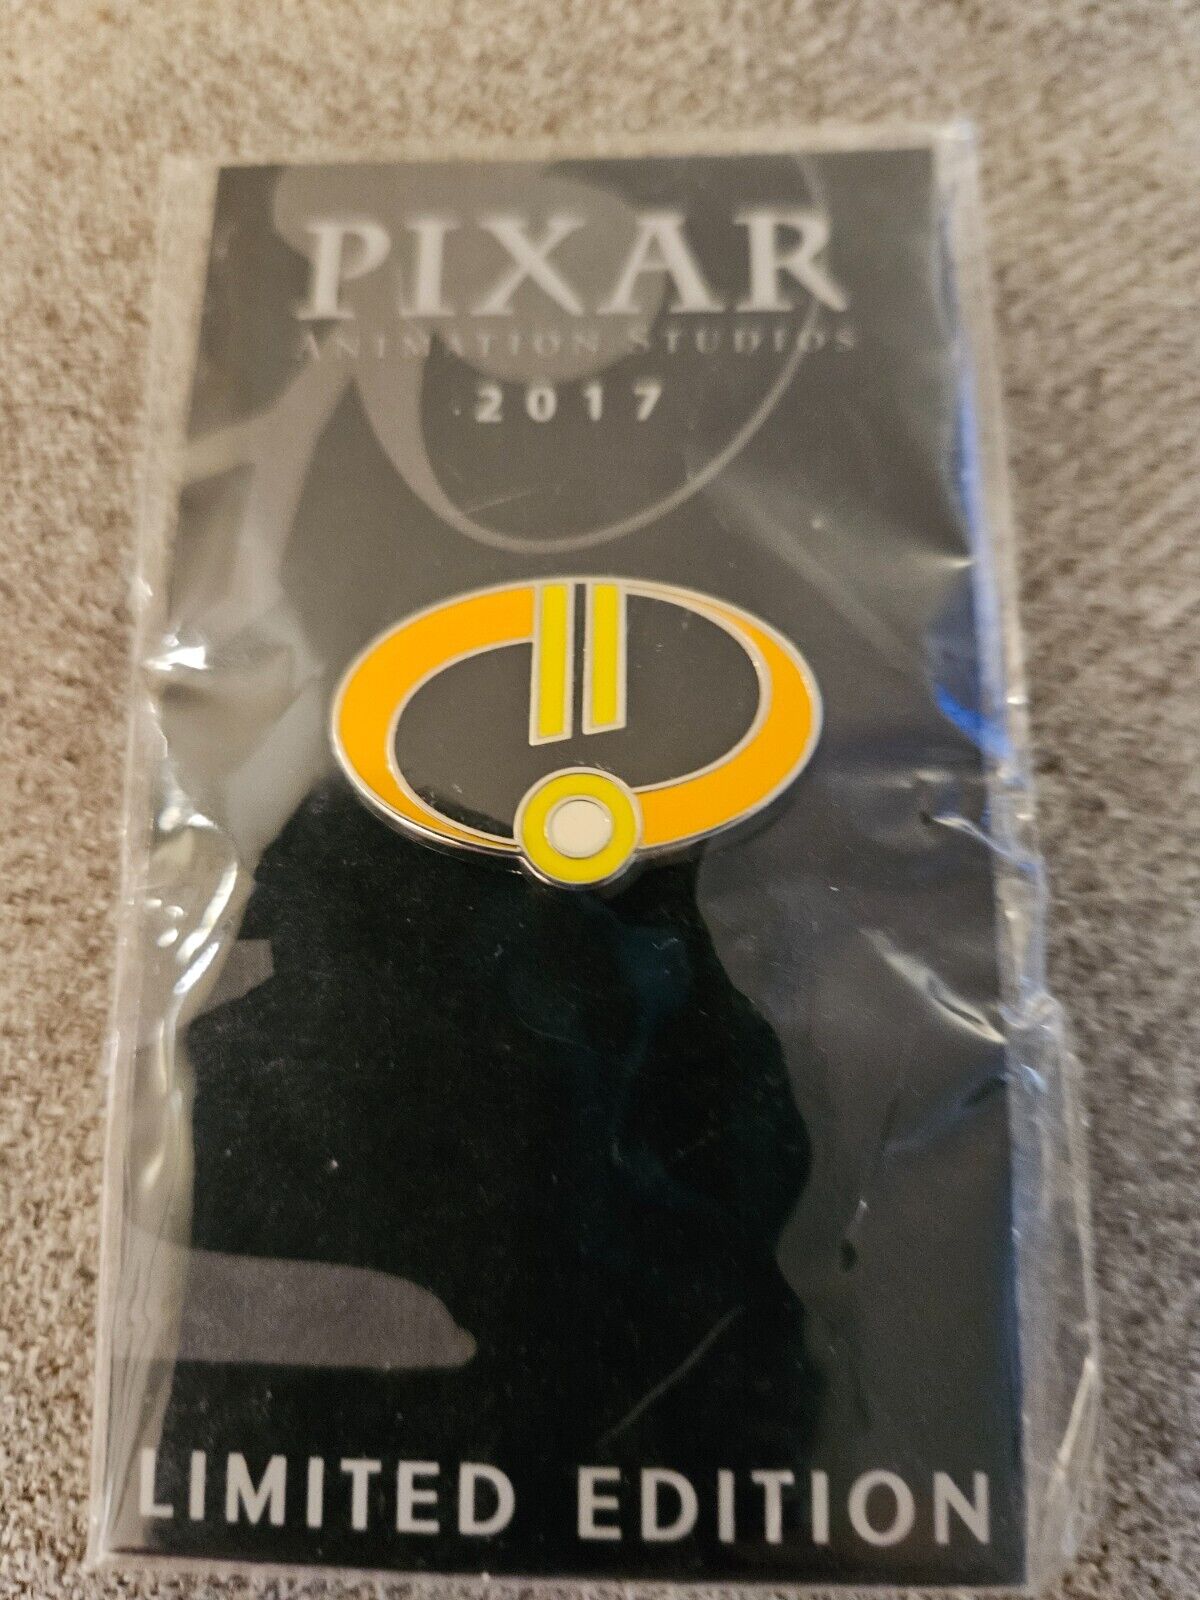 2017 Limited Edition PIXAR Incredibles 2 enamel pin  unopened